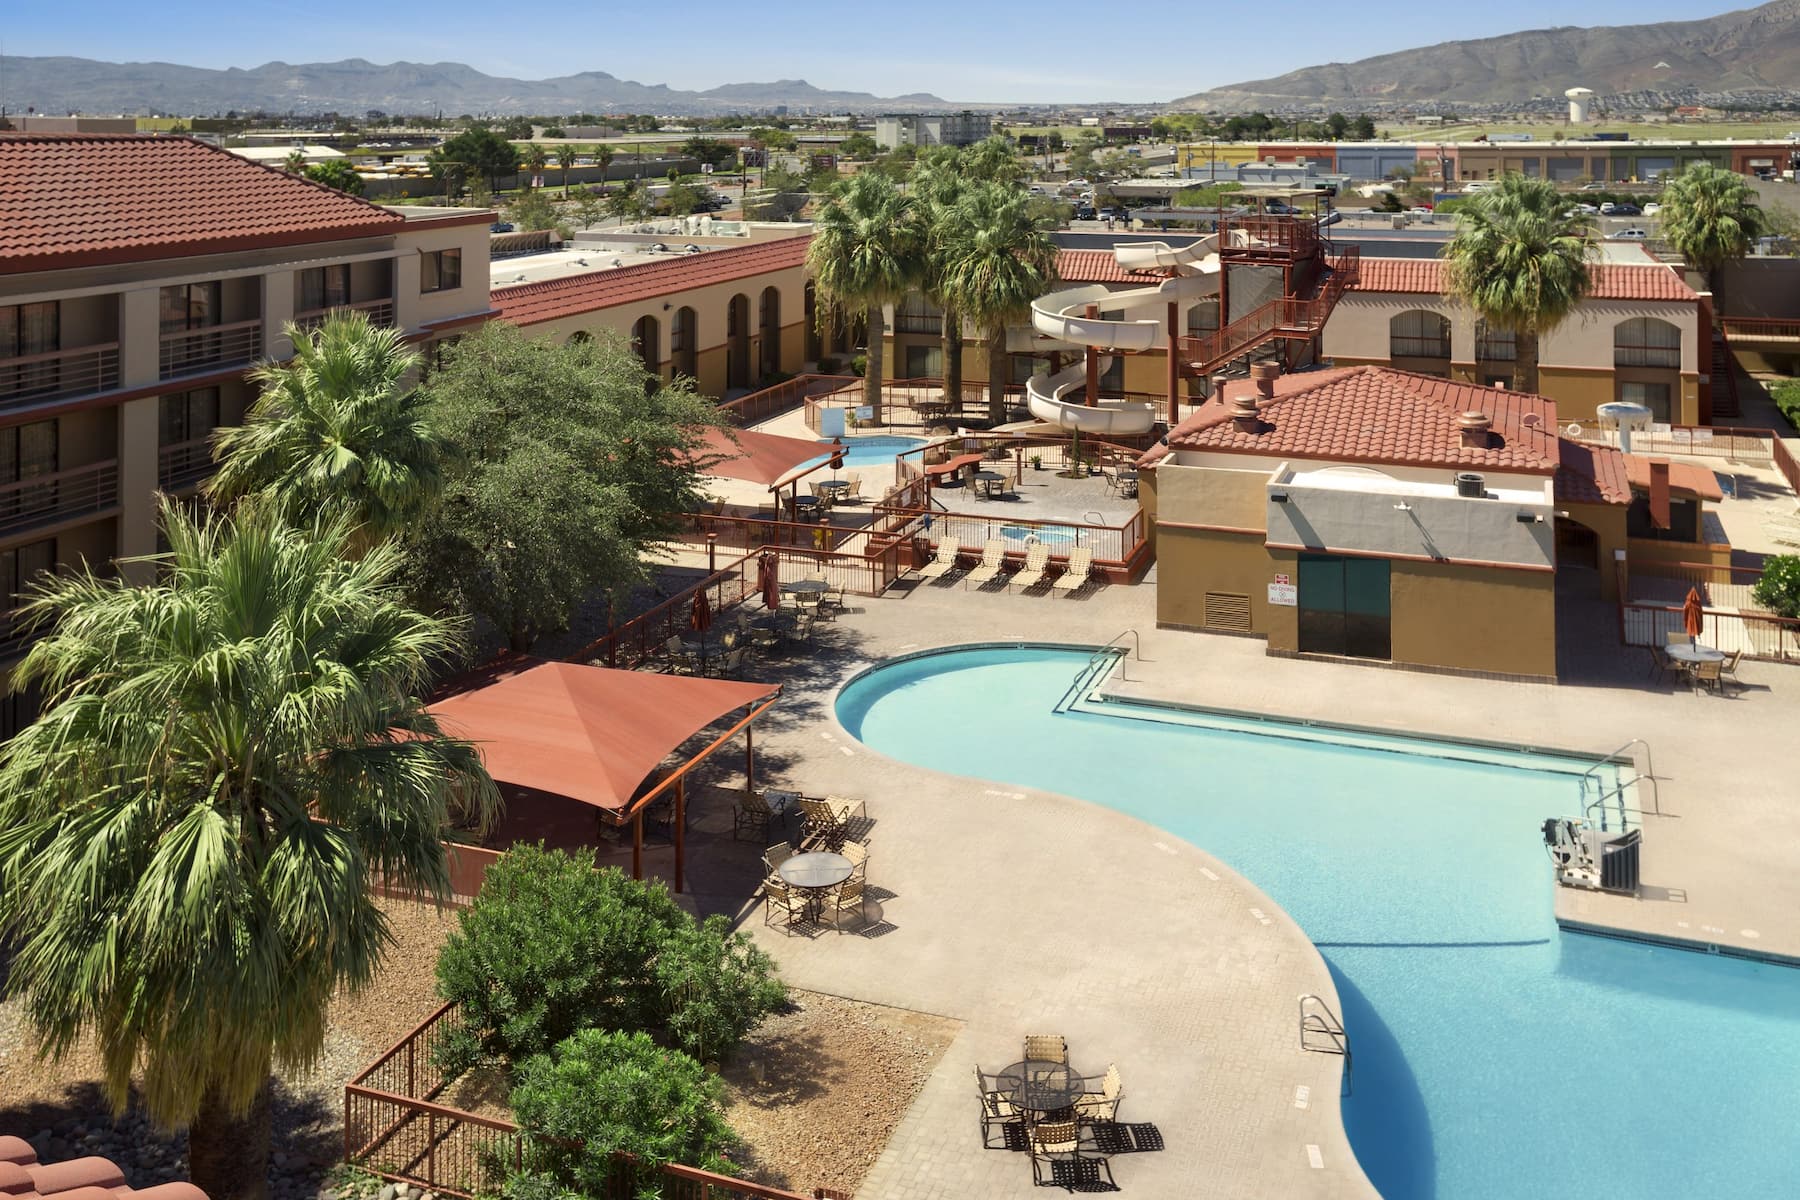 Wyndham El Paso Airport Hotel and Water Park Meetings1800 x 1200